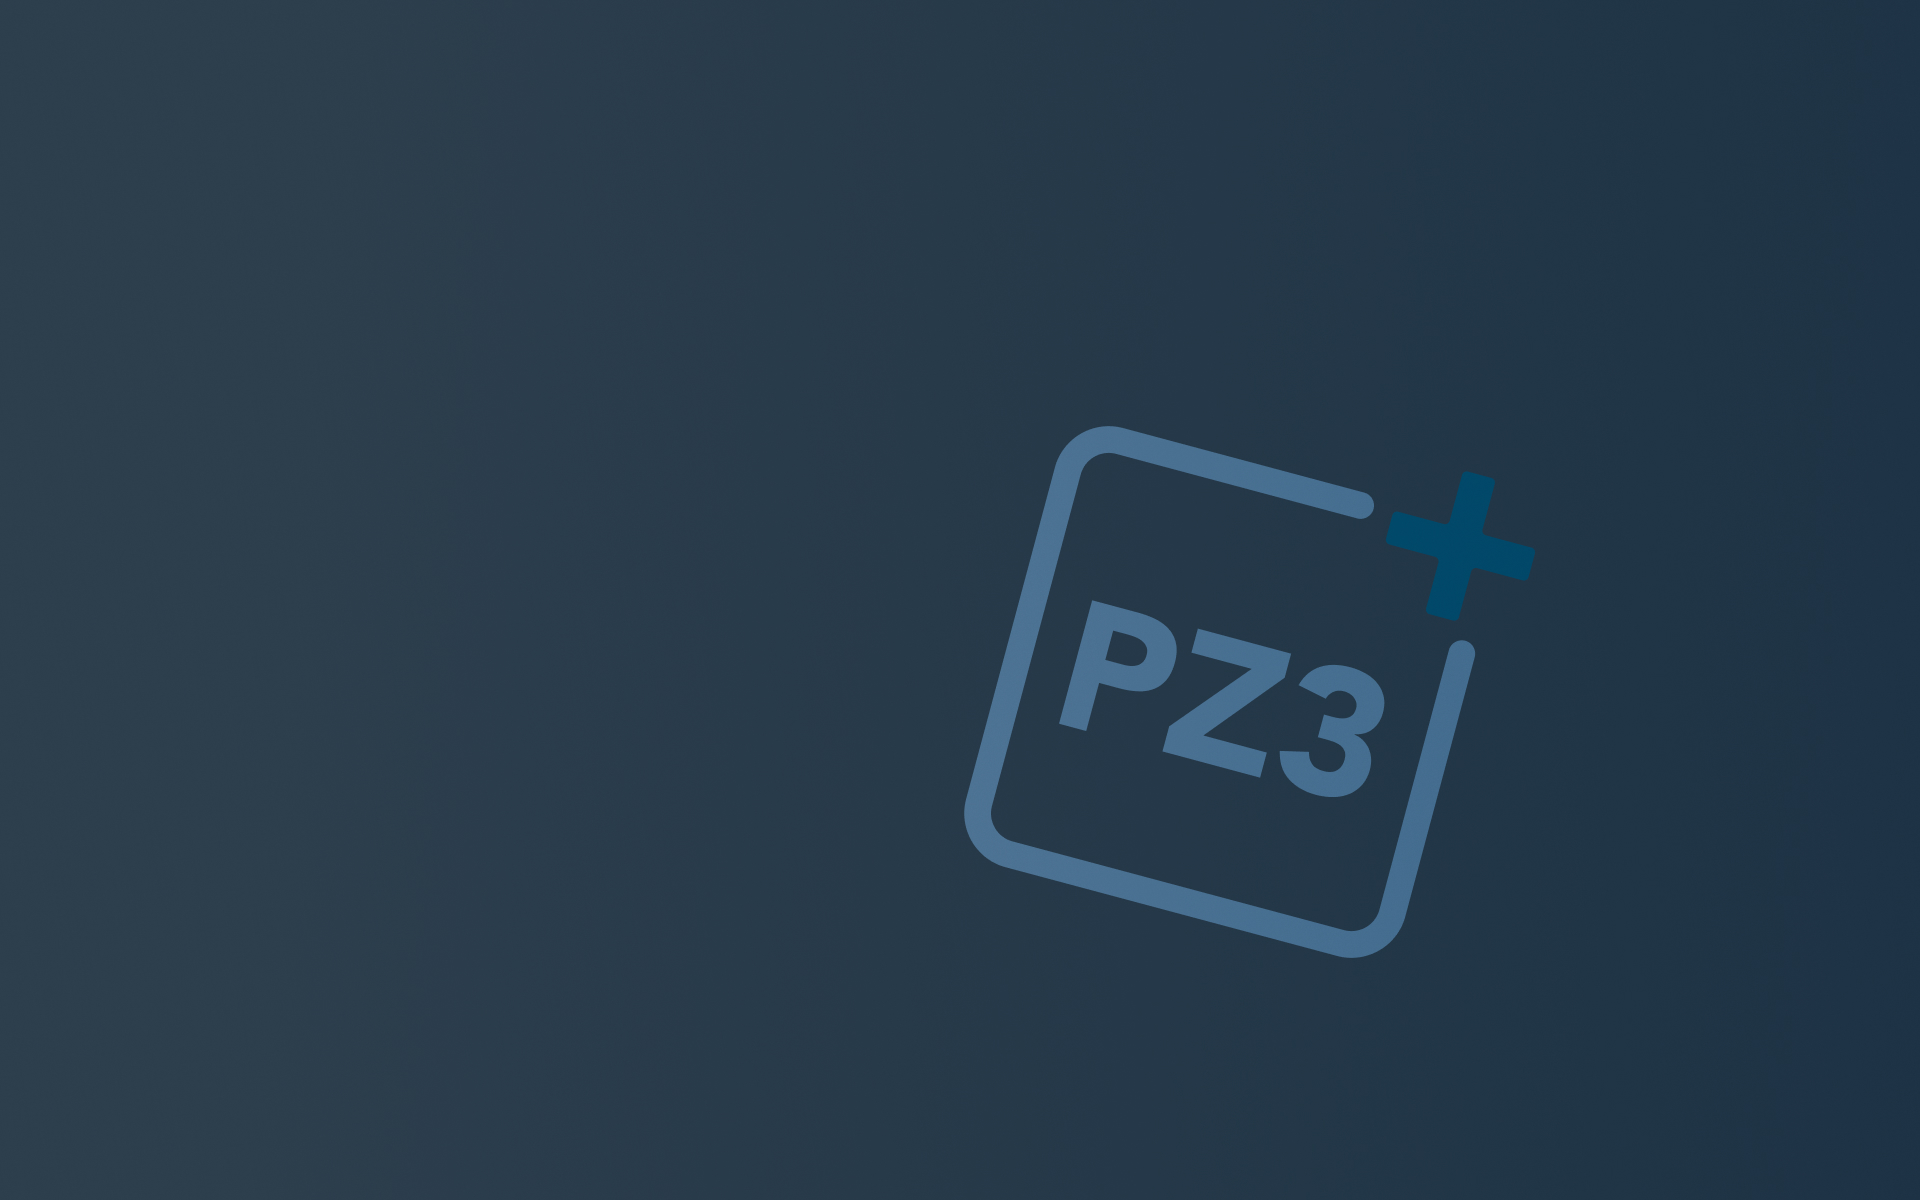 PZ3+ Icon Background